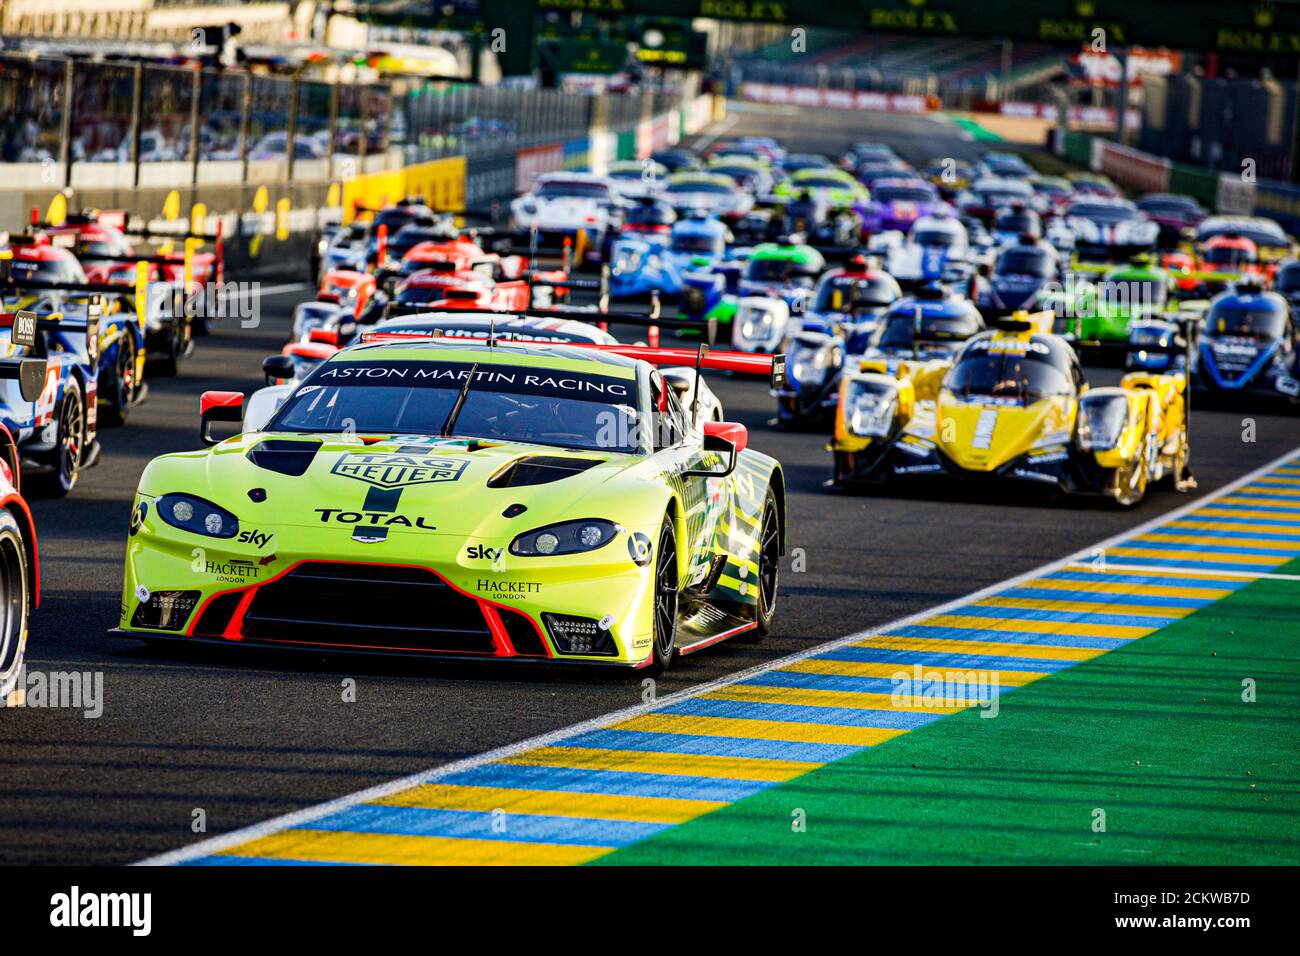 Le Mans, Francia. 16 de septiembre de 2020. Crédito: Gruppo Editoriale LiveMedia/Alamy Live News Foto de stock